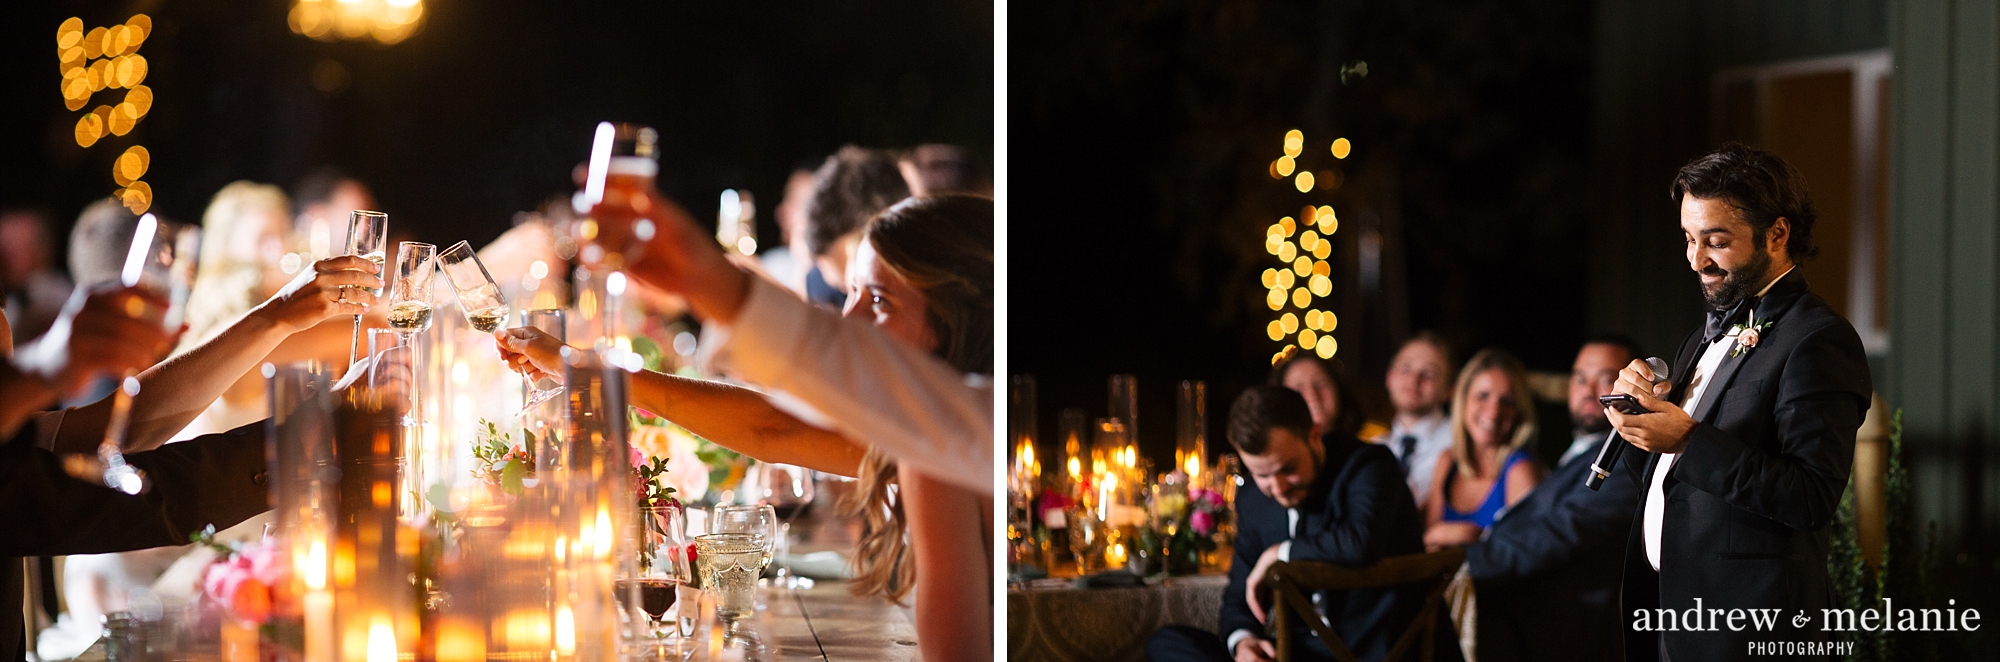 Elegant candle lit wedding tables